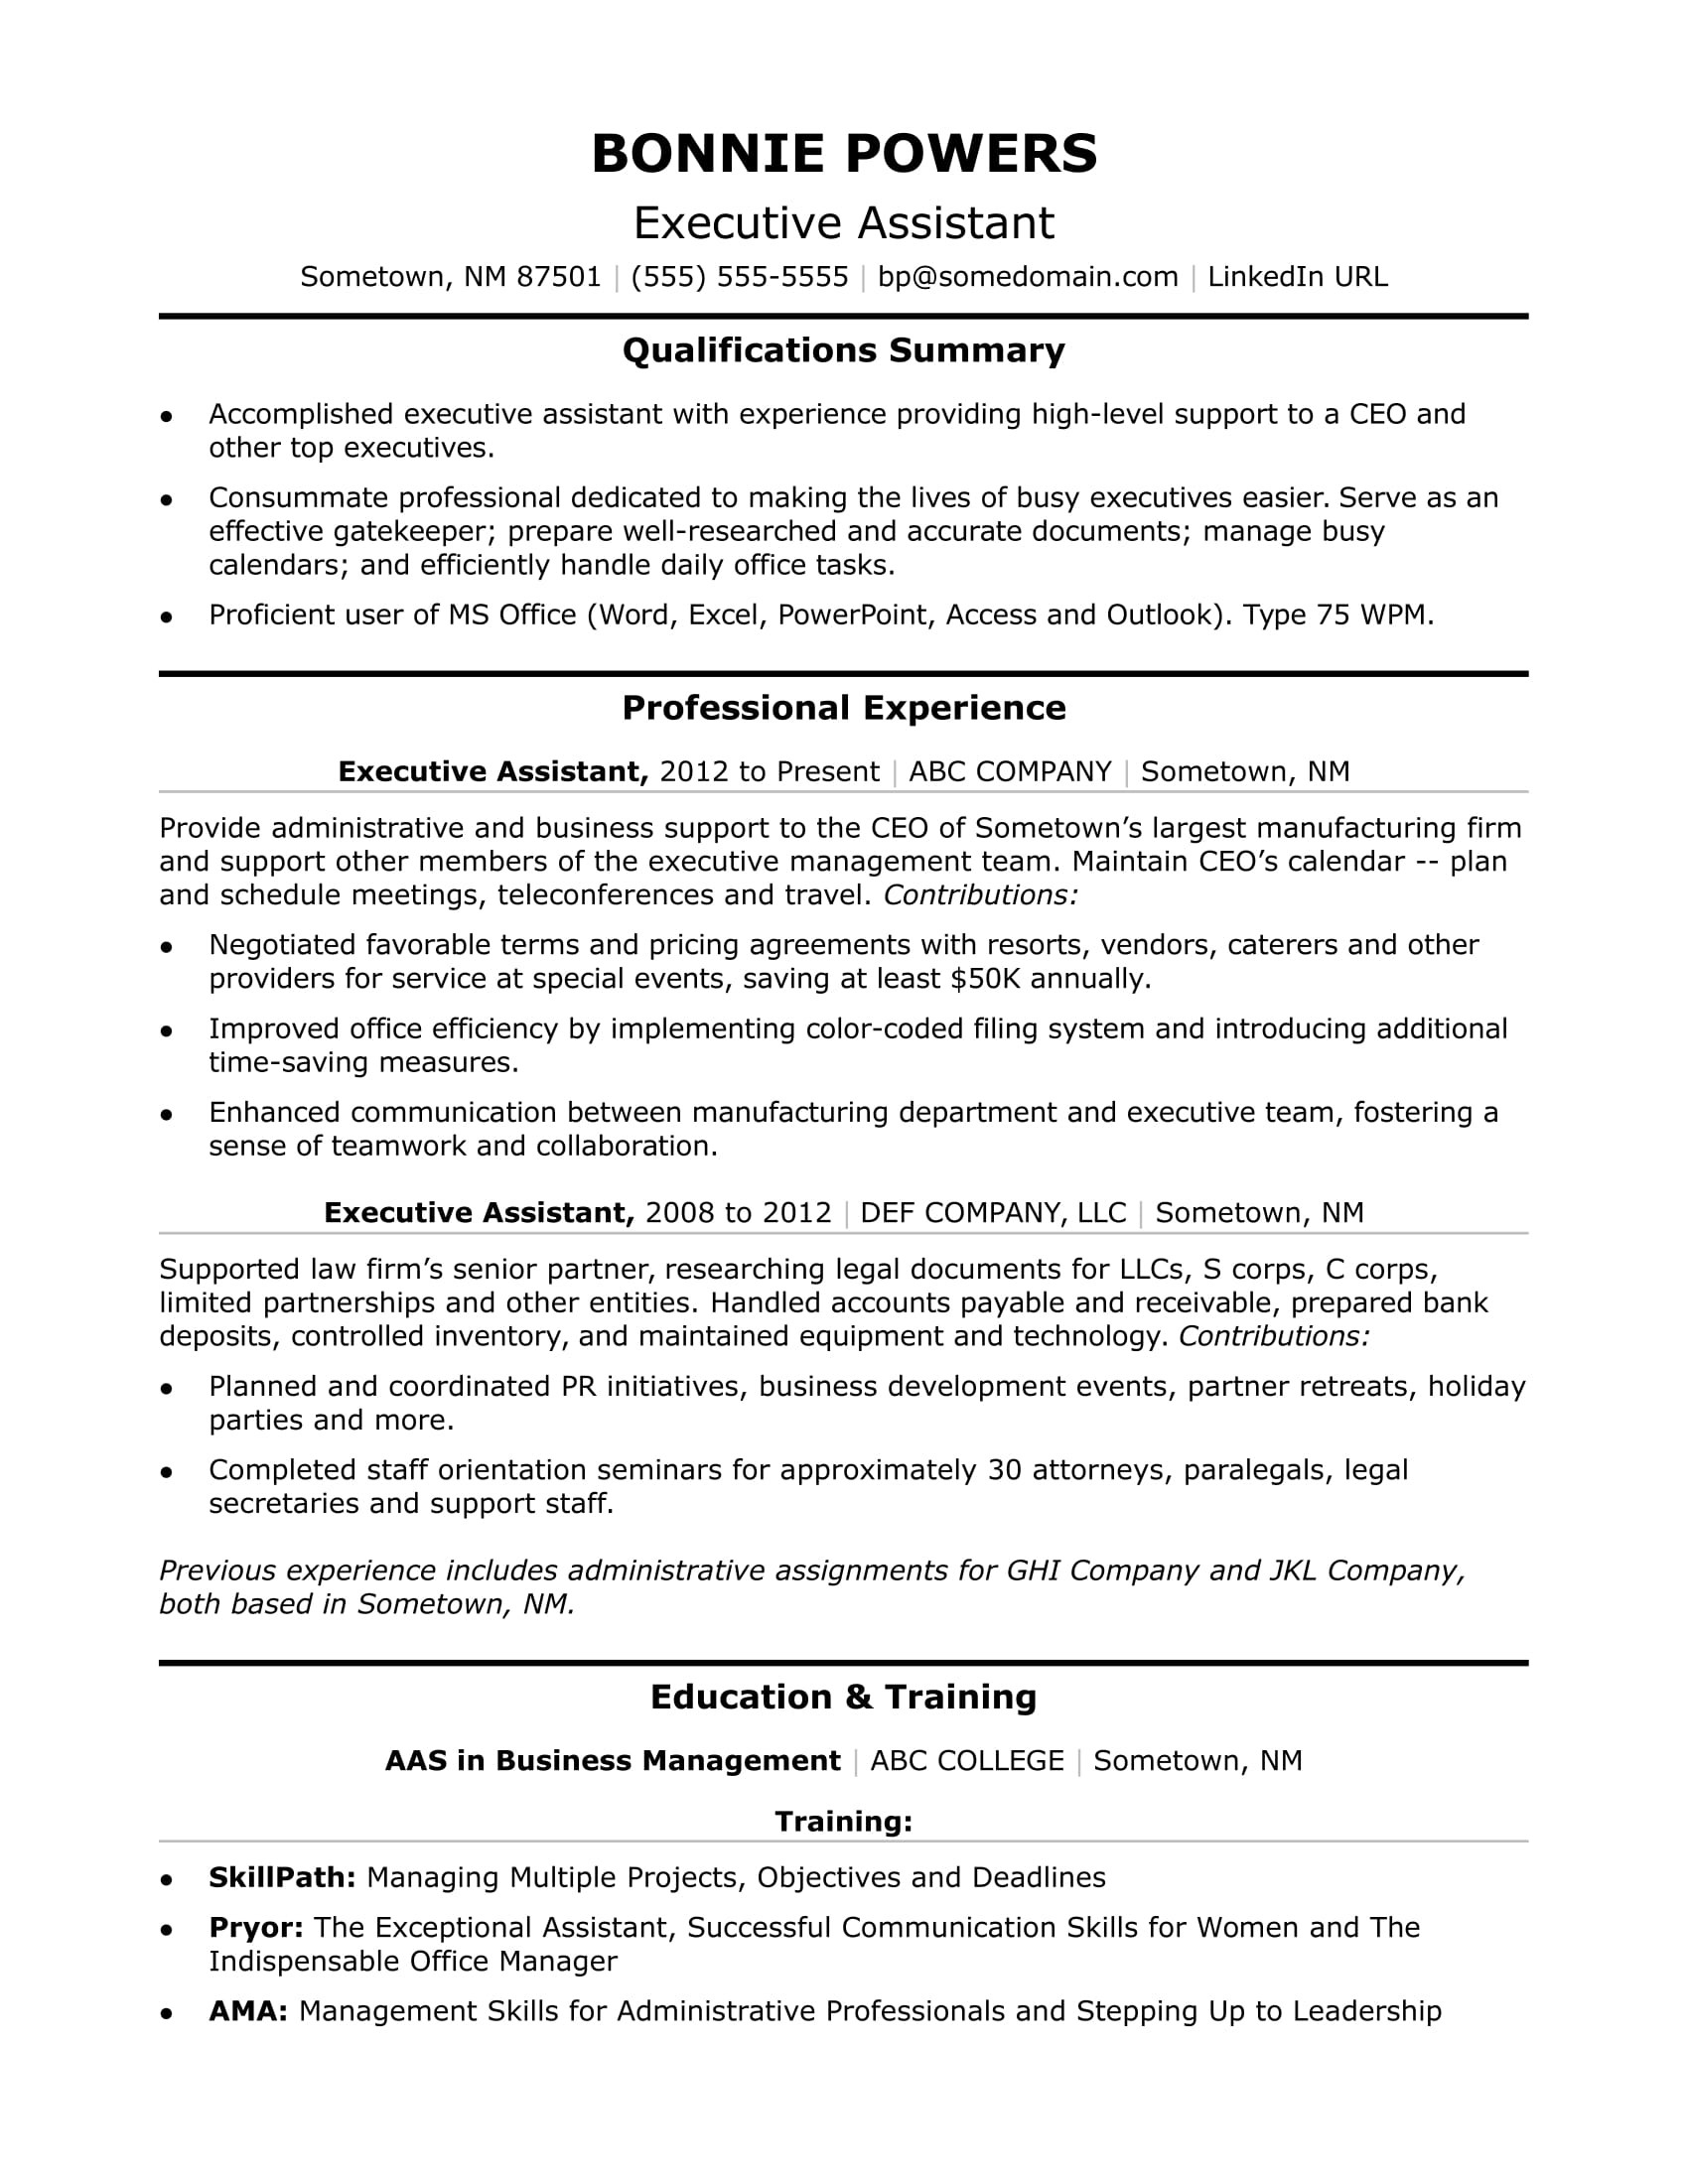 Sample Professional Resume for Administrative assistant Executive Administrative assistant Resume Sample Monster.com